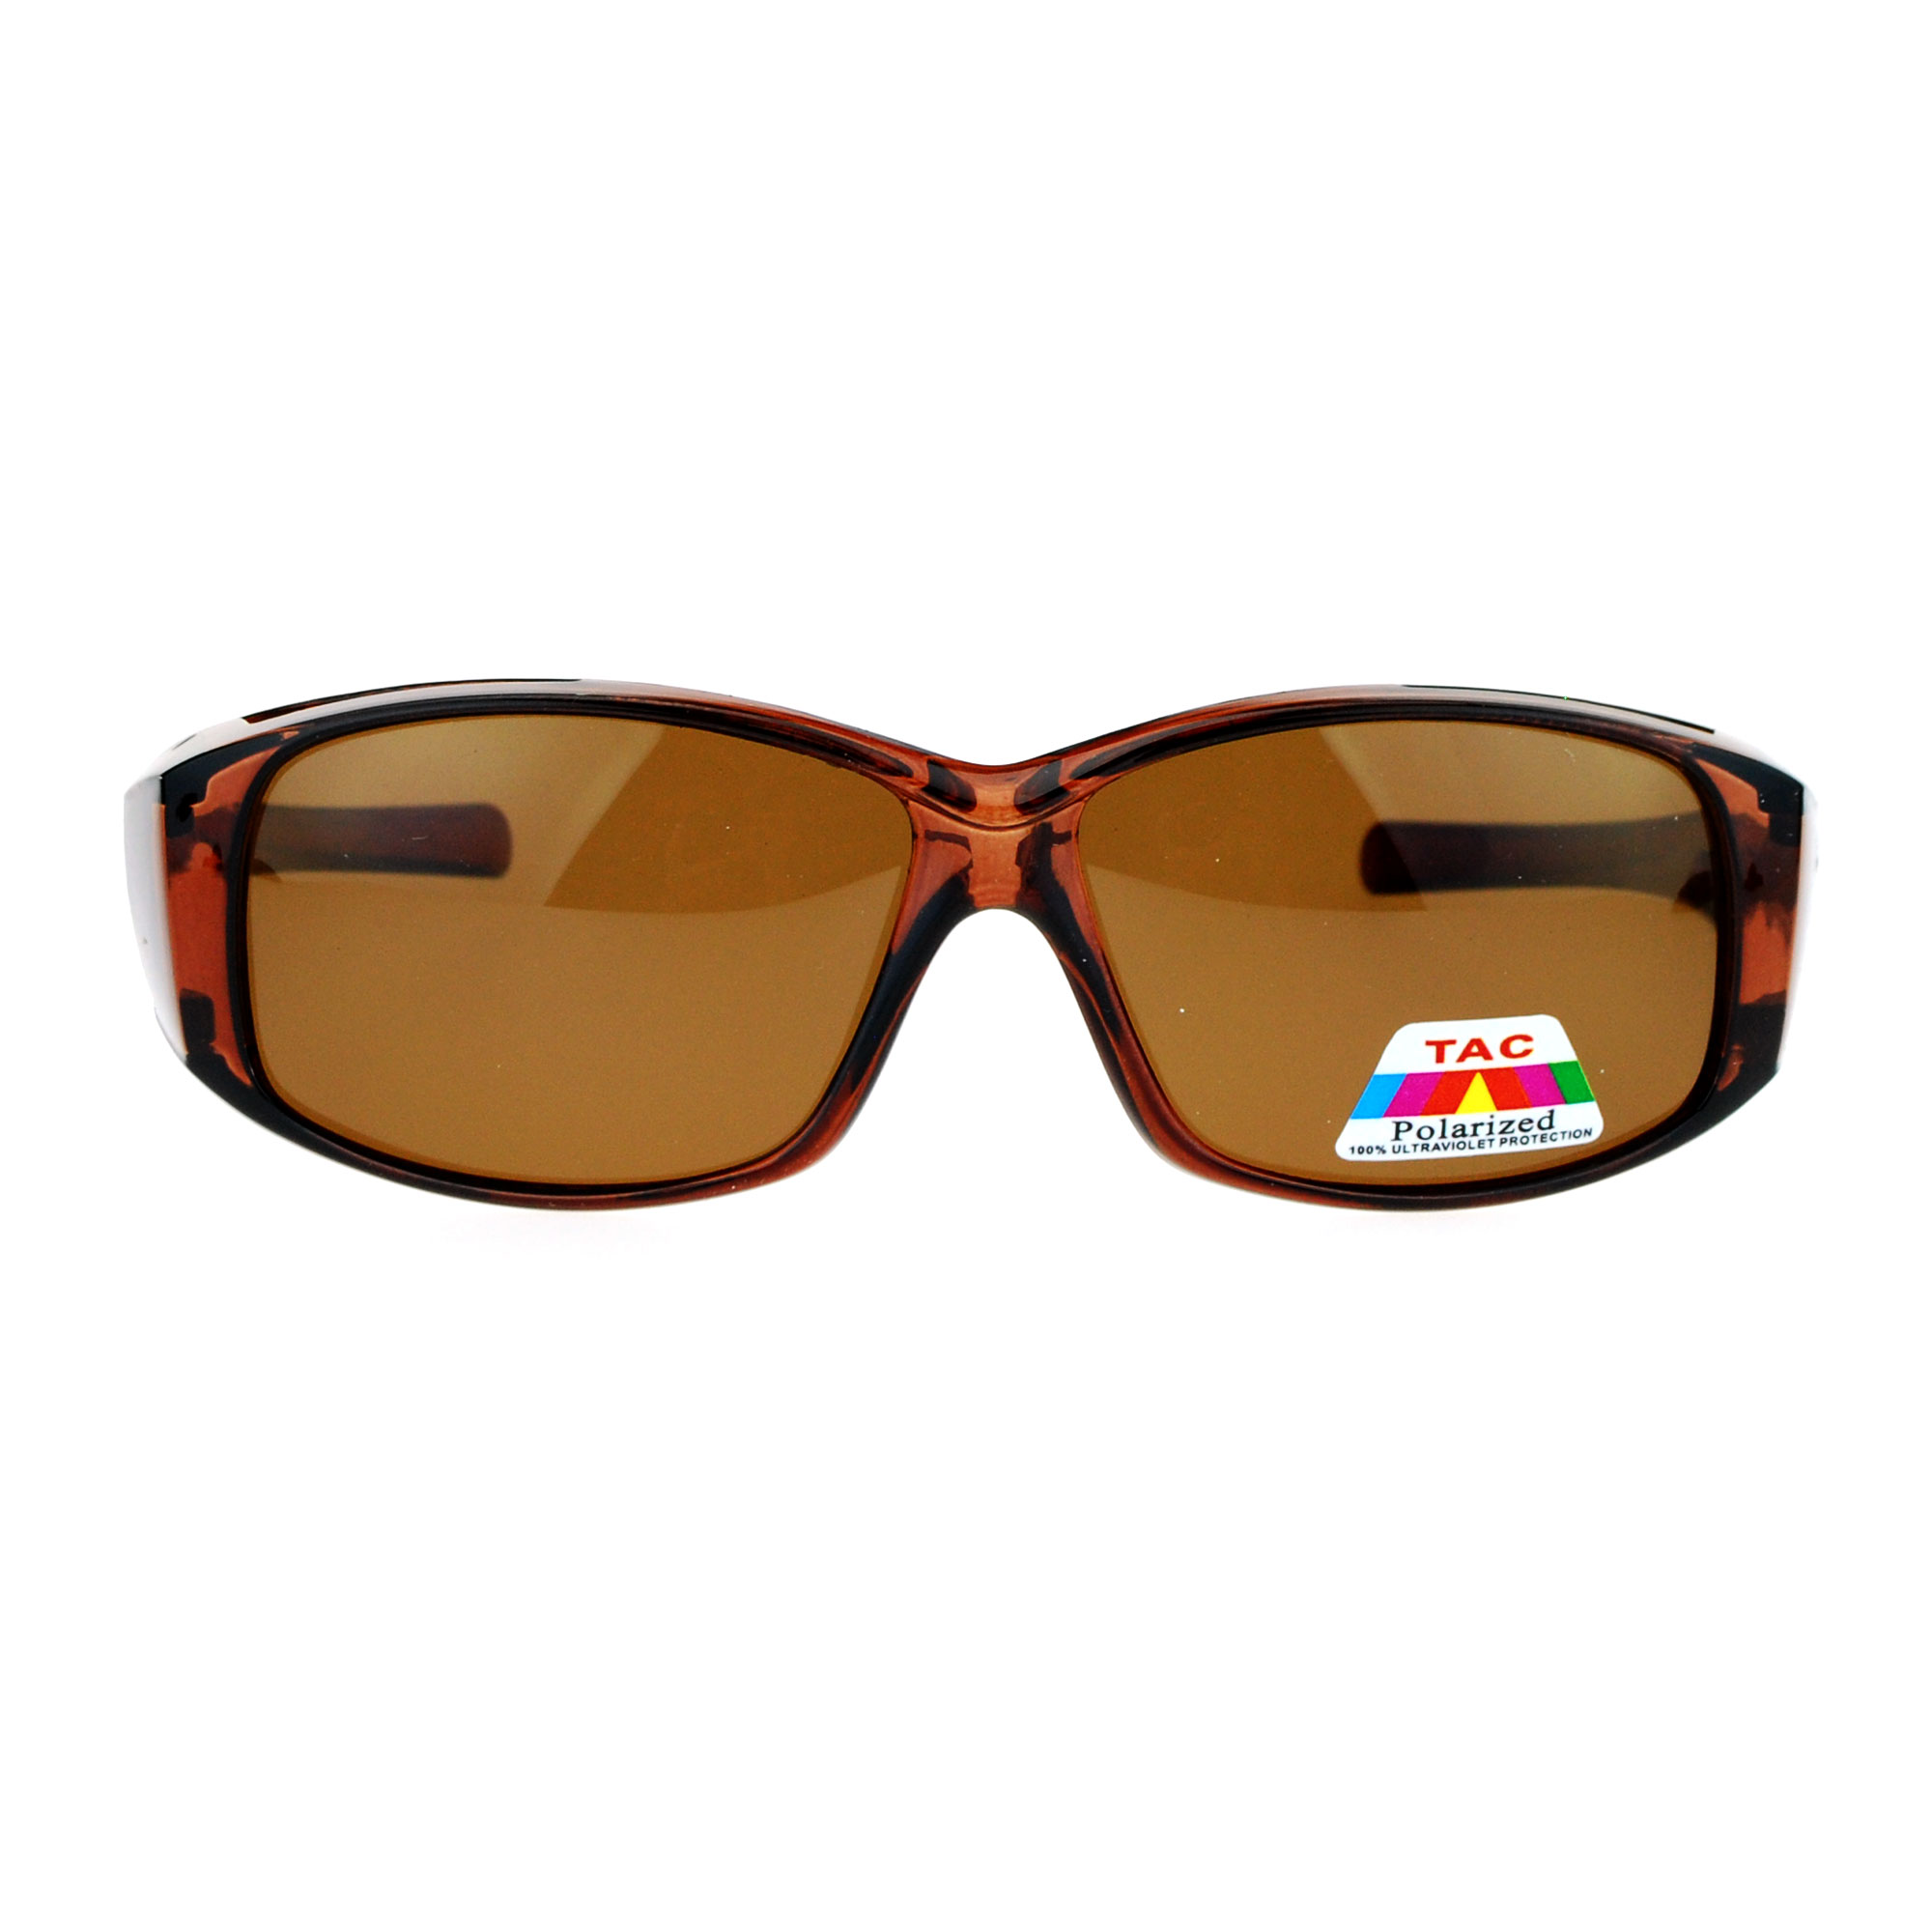 SA106 Fit Over Glasses Anti-glare Polarized Rectangular Sunglasses | eBay